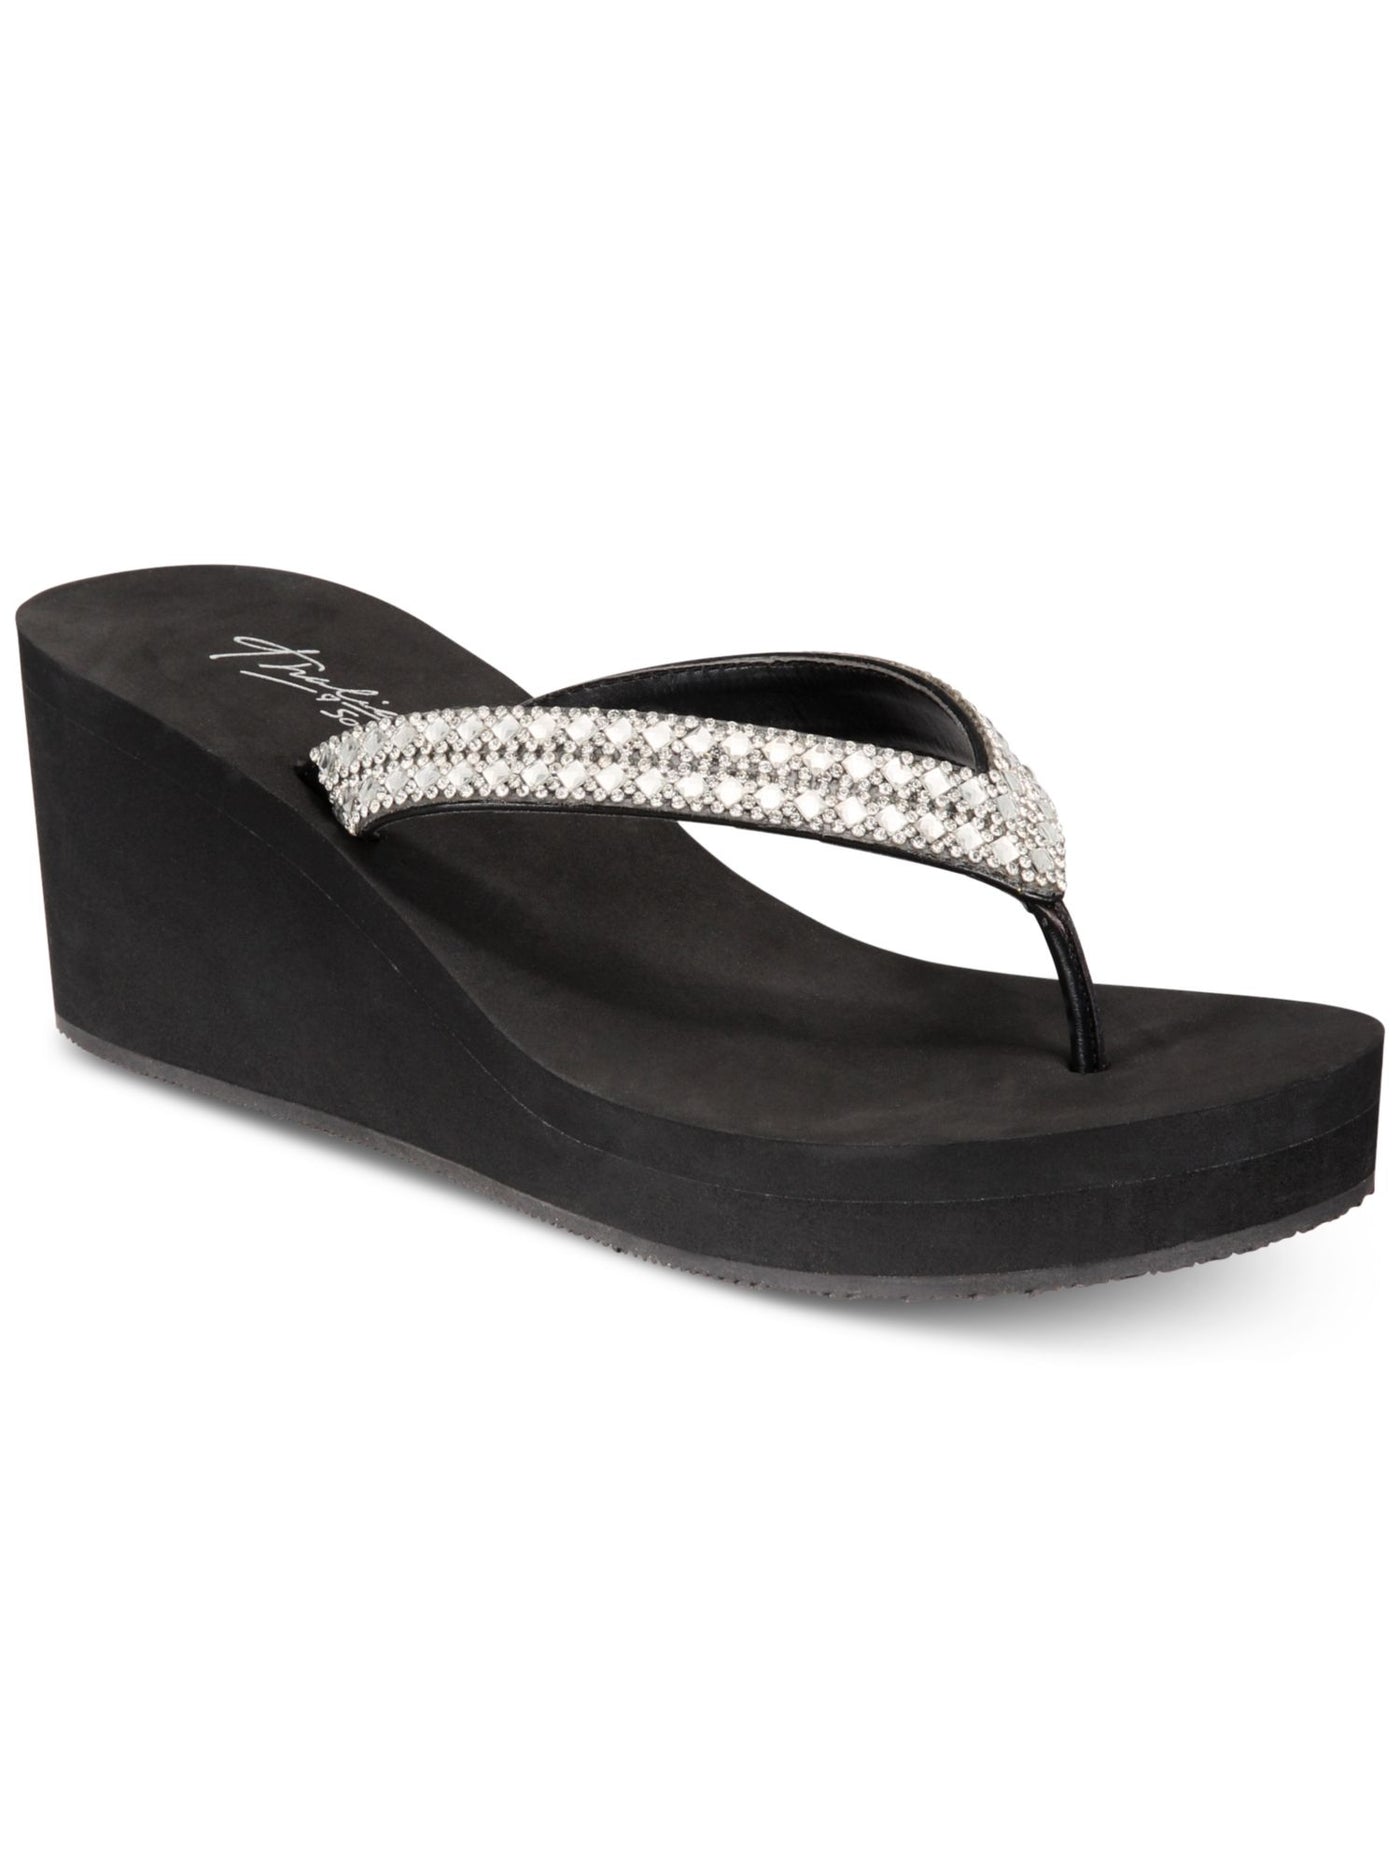 THALIA SODI Womens Black Rhinestone Embellishment Comfort Emira Round Toe Wedge Slip On Flip Flop Sandal 10 M